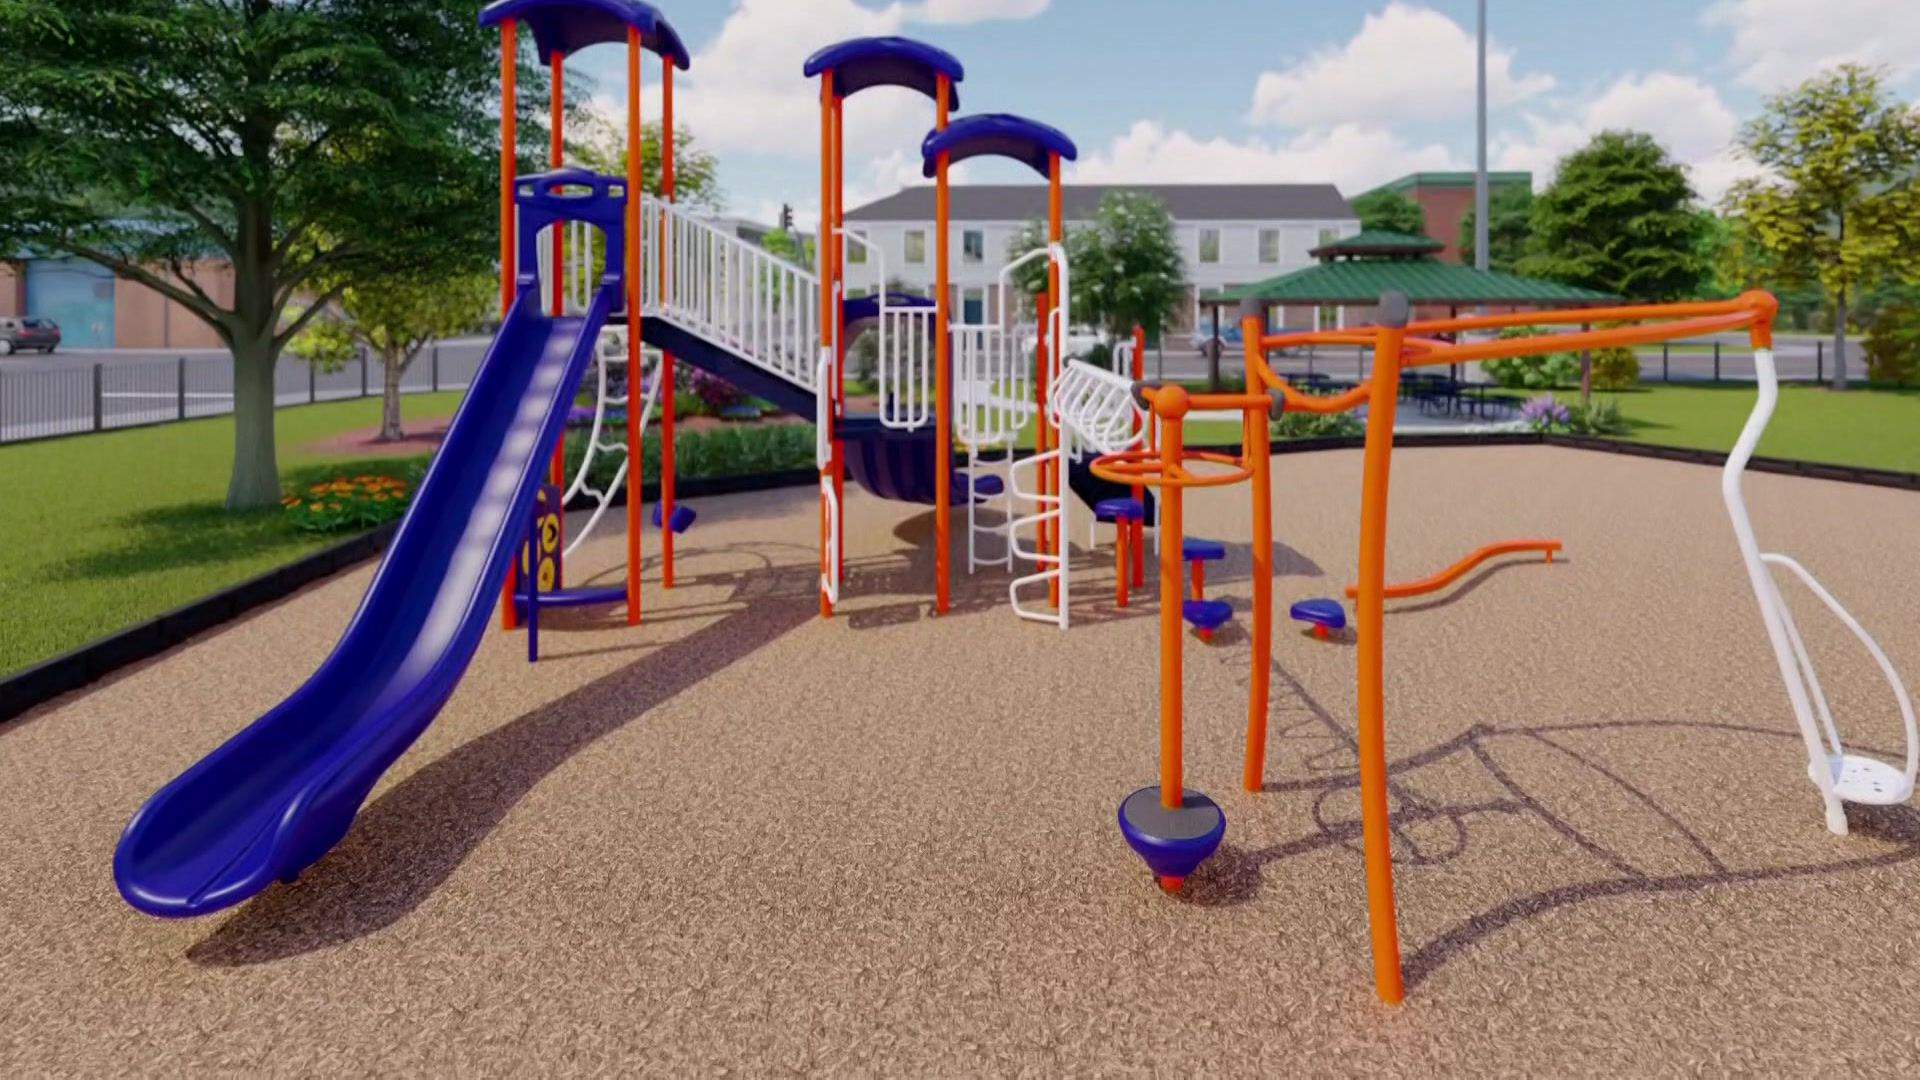 Houston Astros foundation donates $65,000 to help build playground honoring boy who died of brain eating amoeba